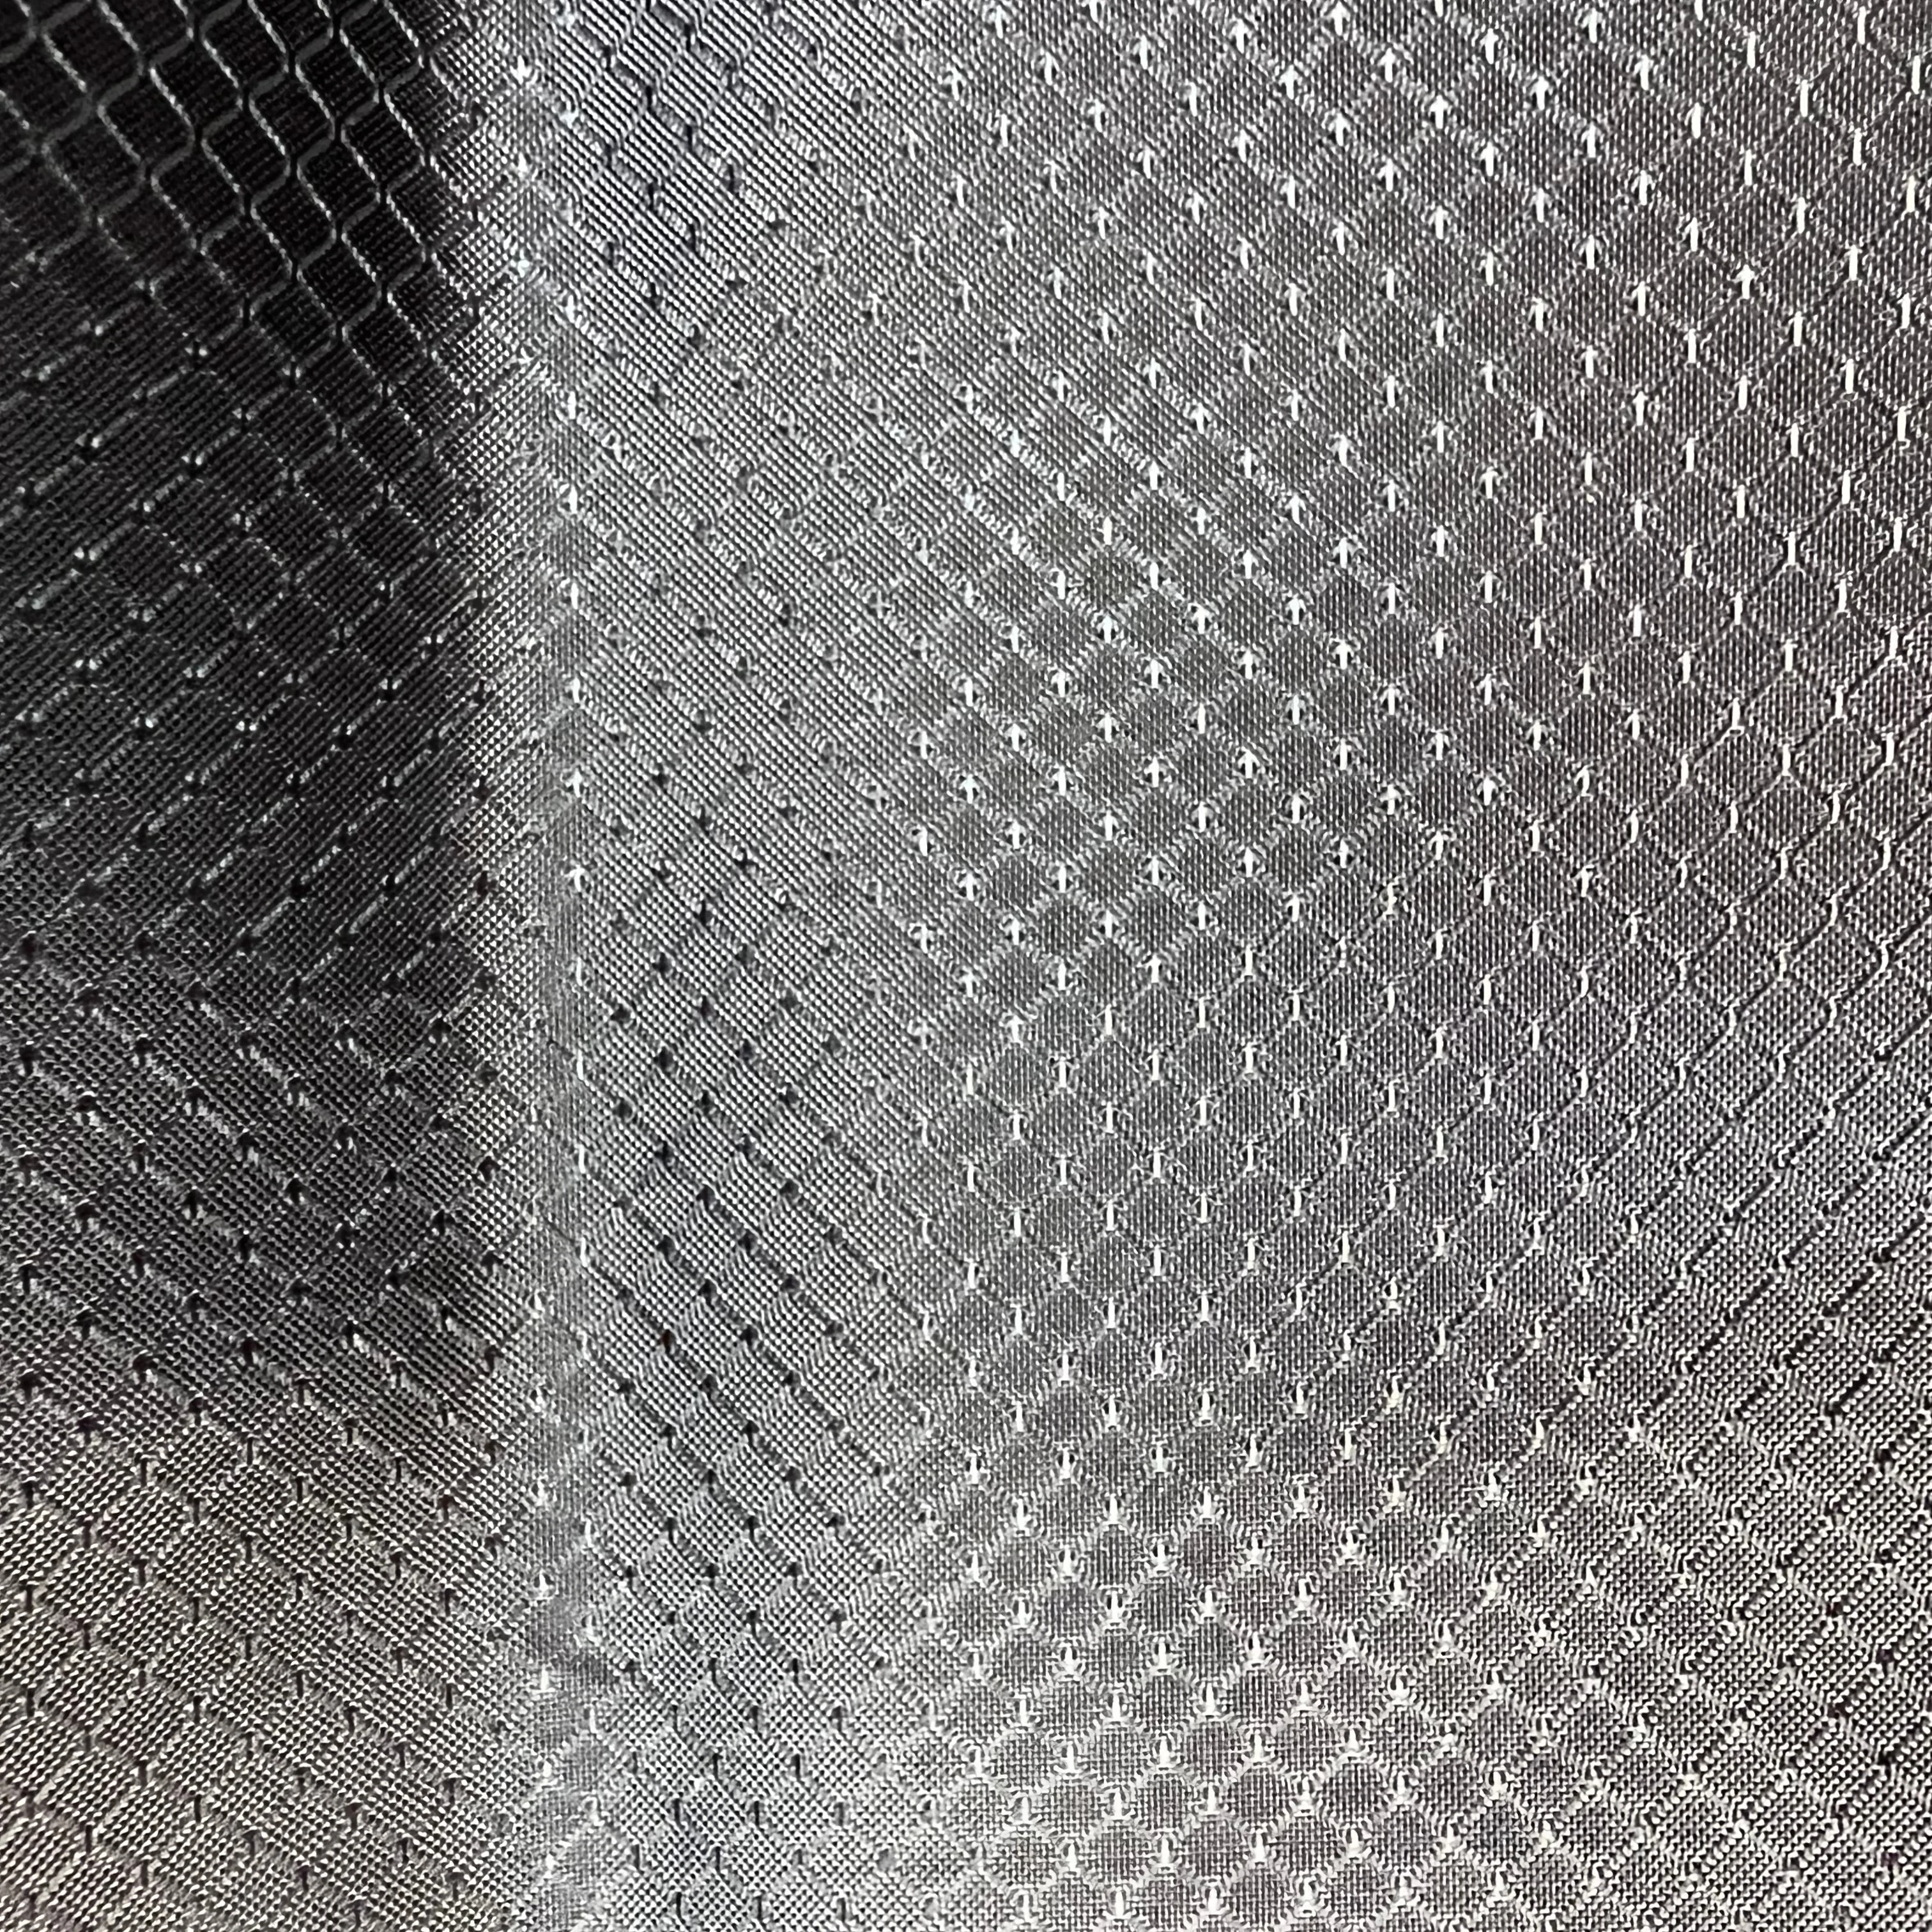 Oxford Fabric 400Dx300D 70% Nylon & 30% Polyester, Diamond Ripstop design, PU2000 + DWR + anti-UV (UPF 40+) coatings